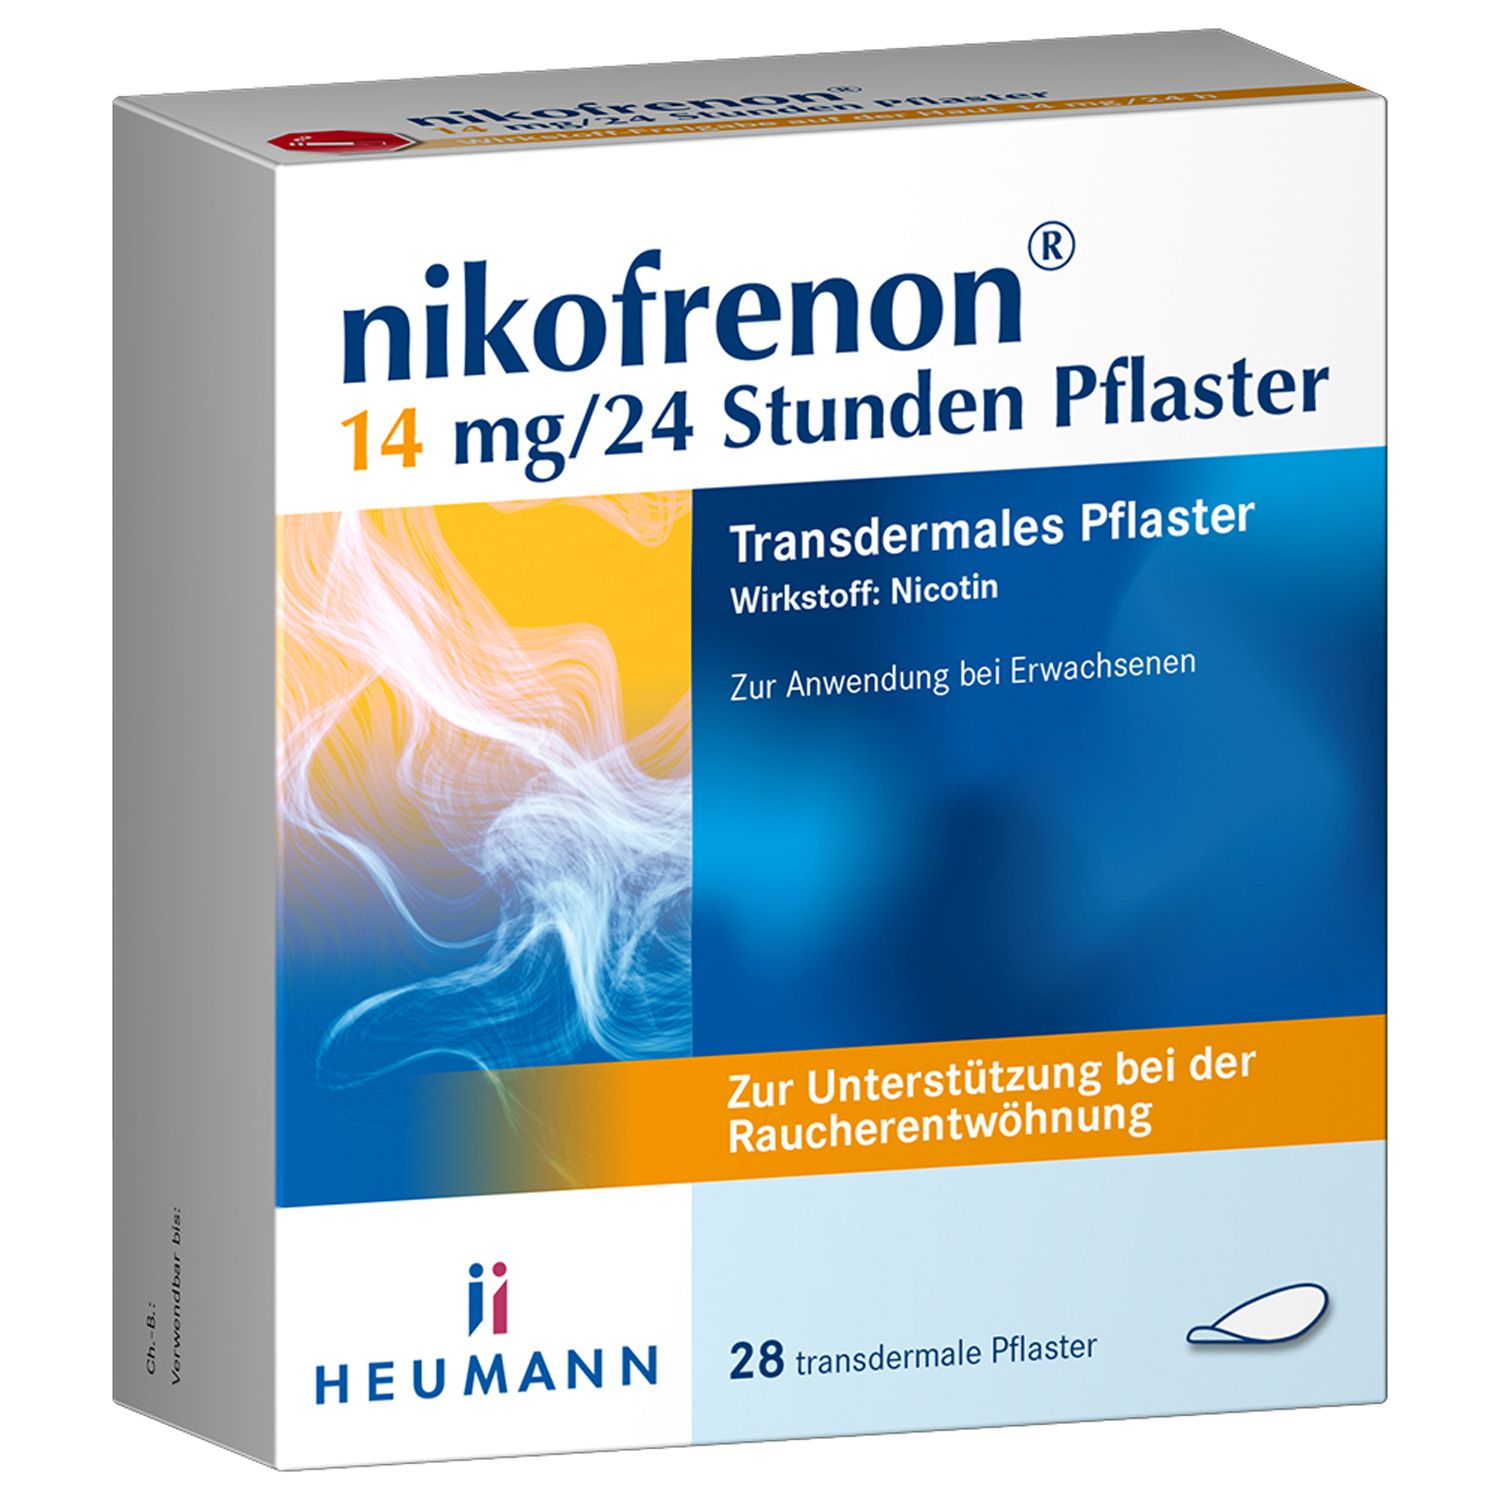 nikofrenon® 14 mg/24 Stunden Pflaster